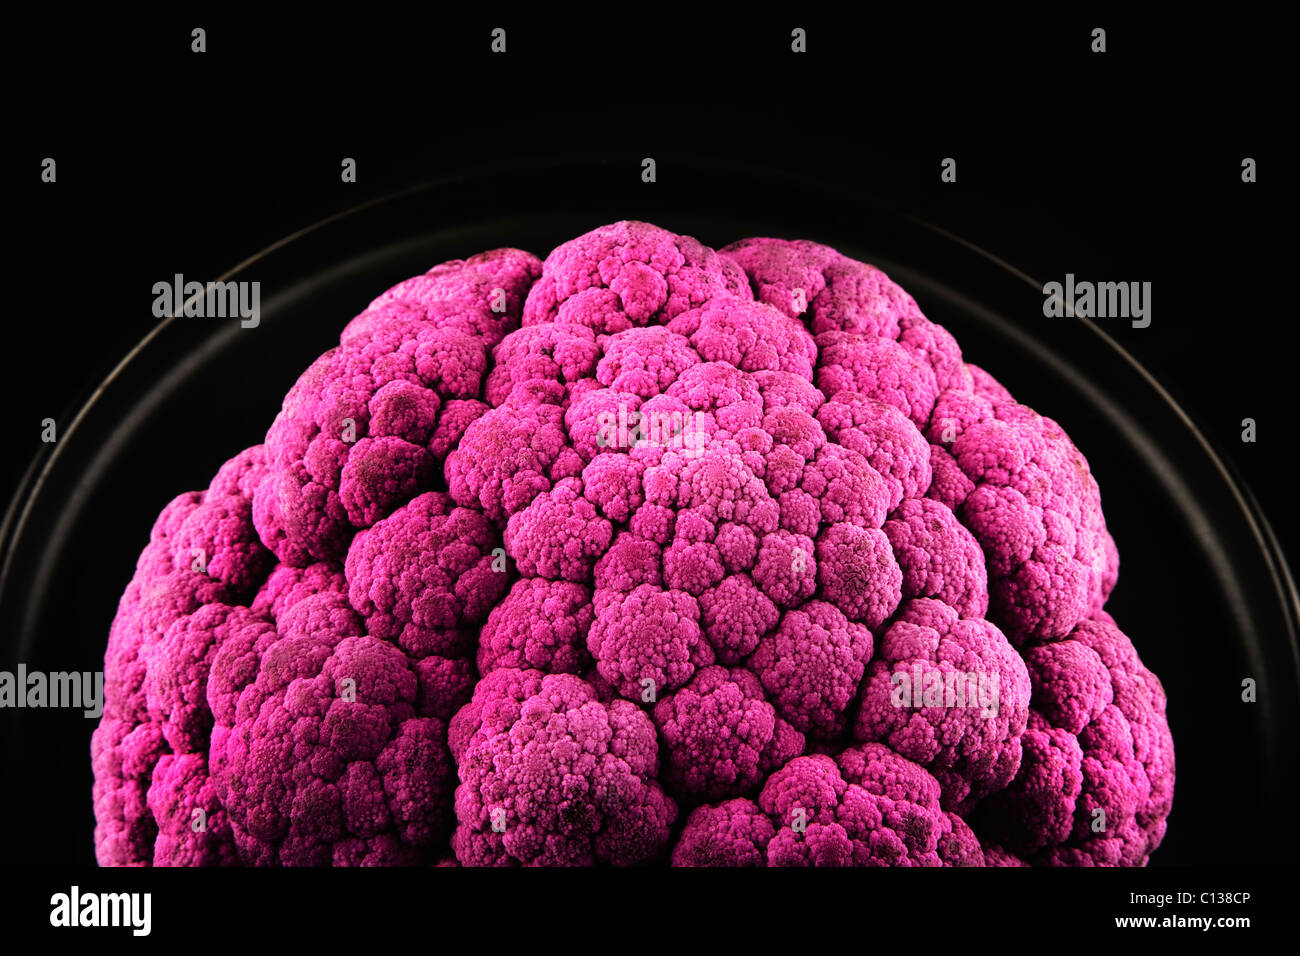 Purple Cauliflower on black background Stock Photo